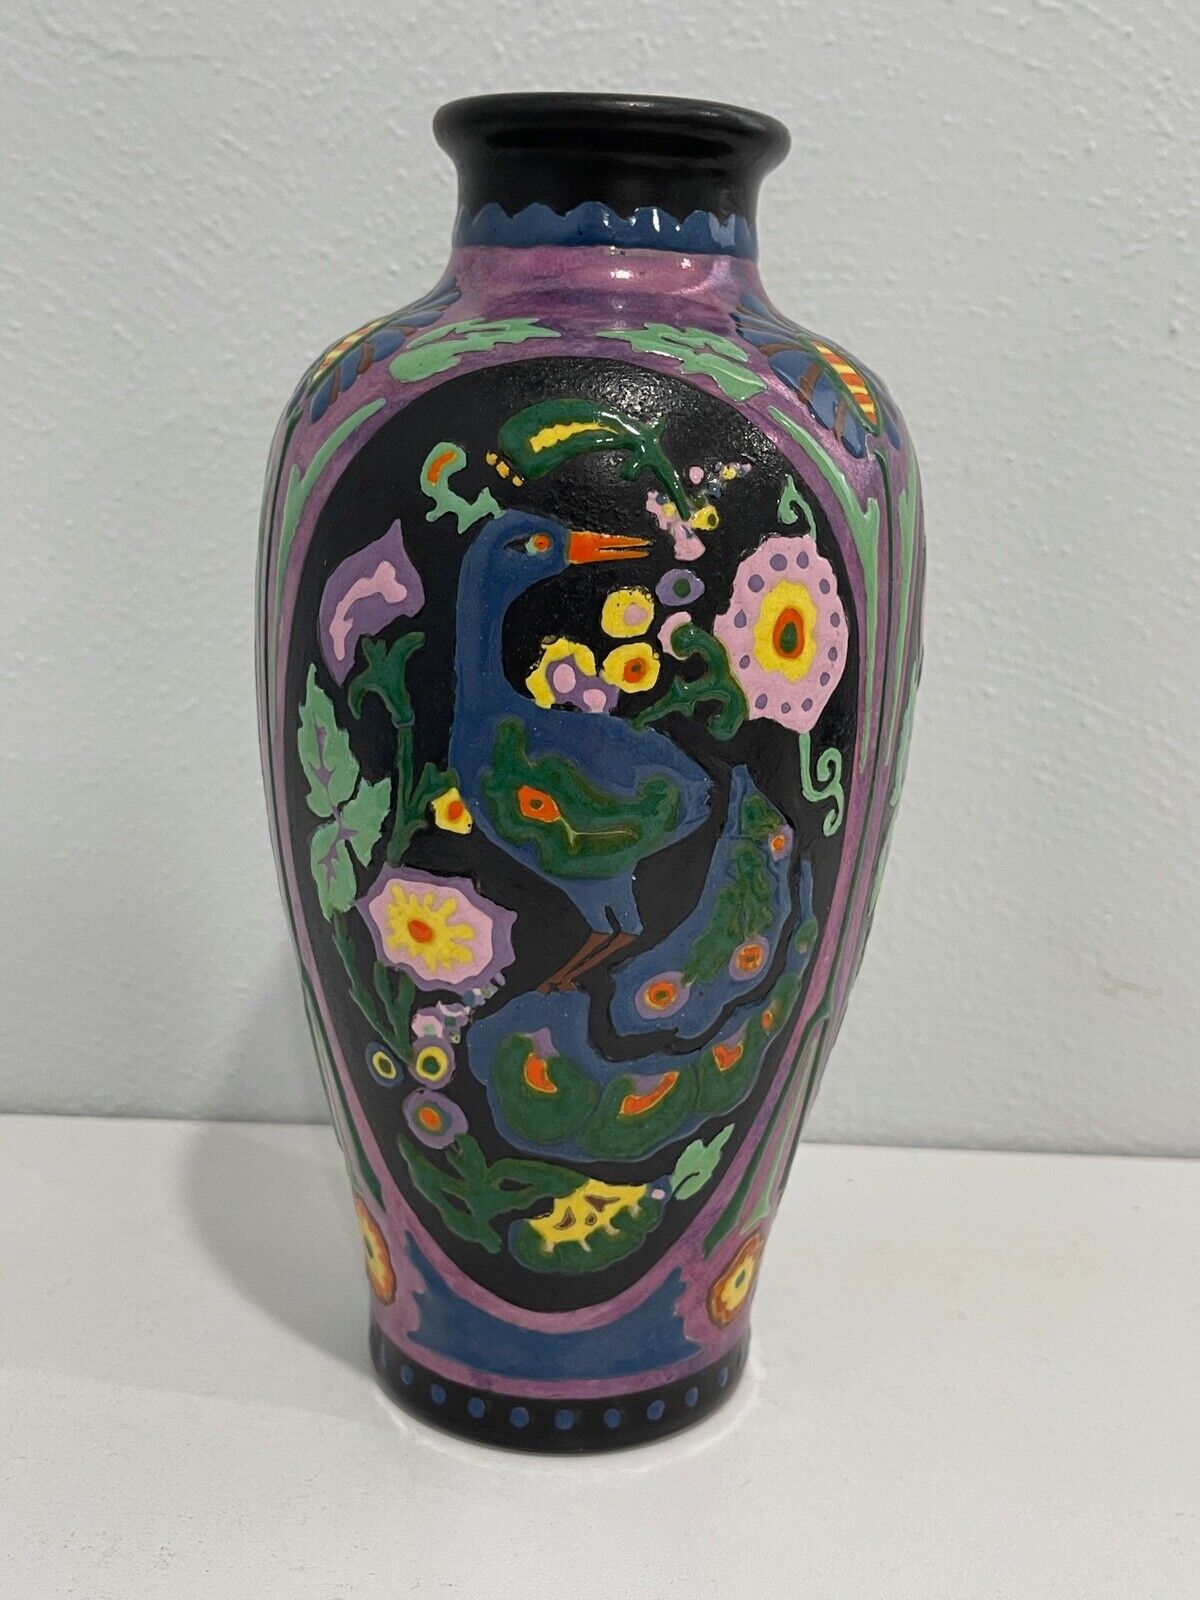 Antique Chinese or Japanese Art Deco Ceramic Vase w/ Birds & Flowers Decoration